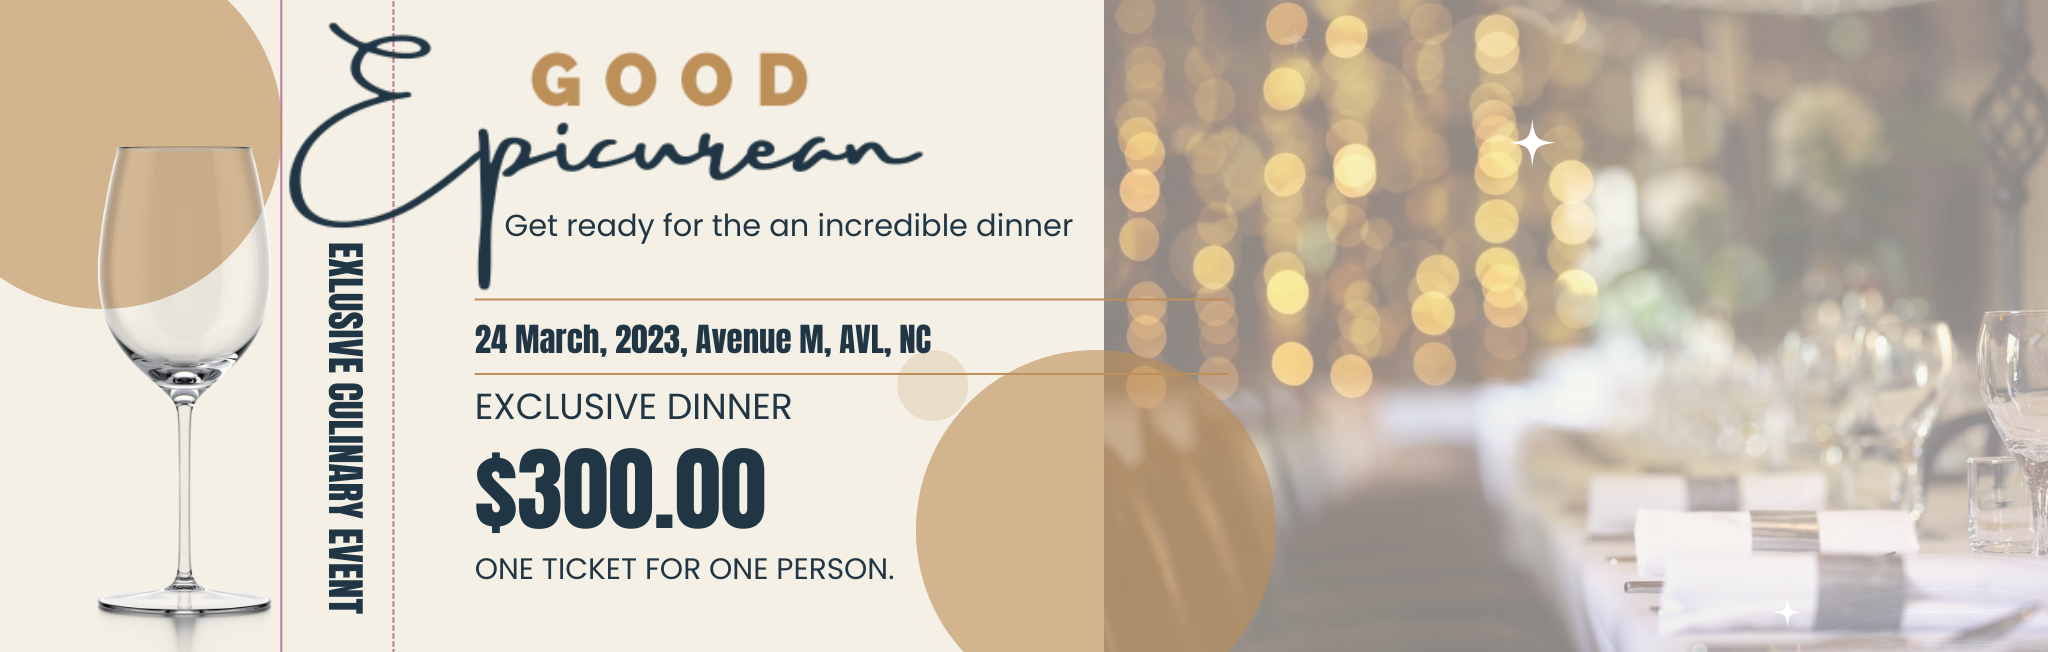 Good-Epicurean-Asheville-Dinner-Ticket